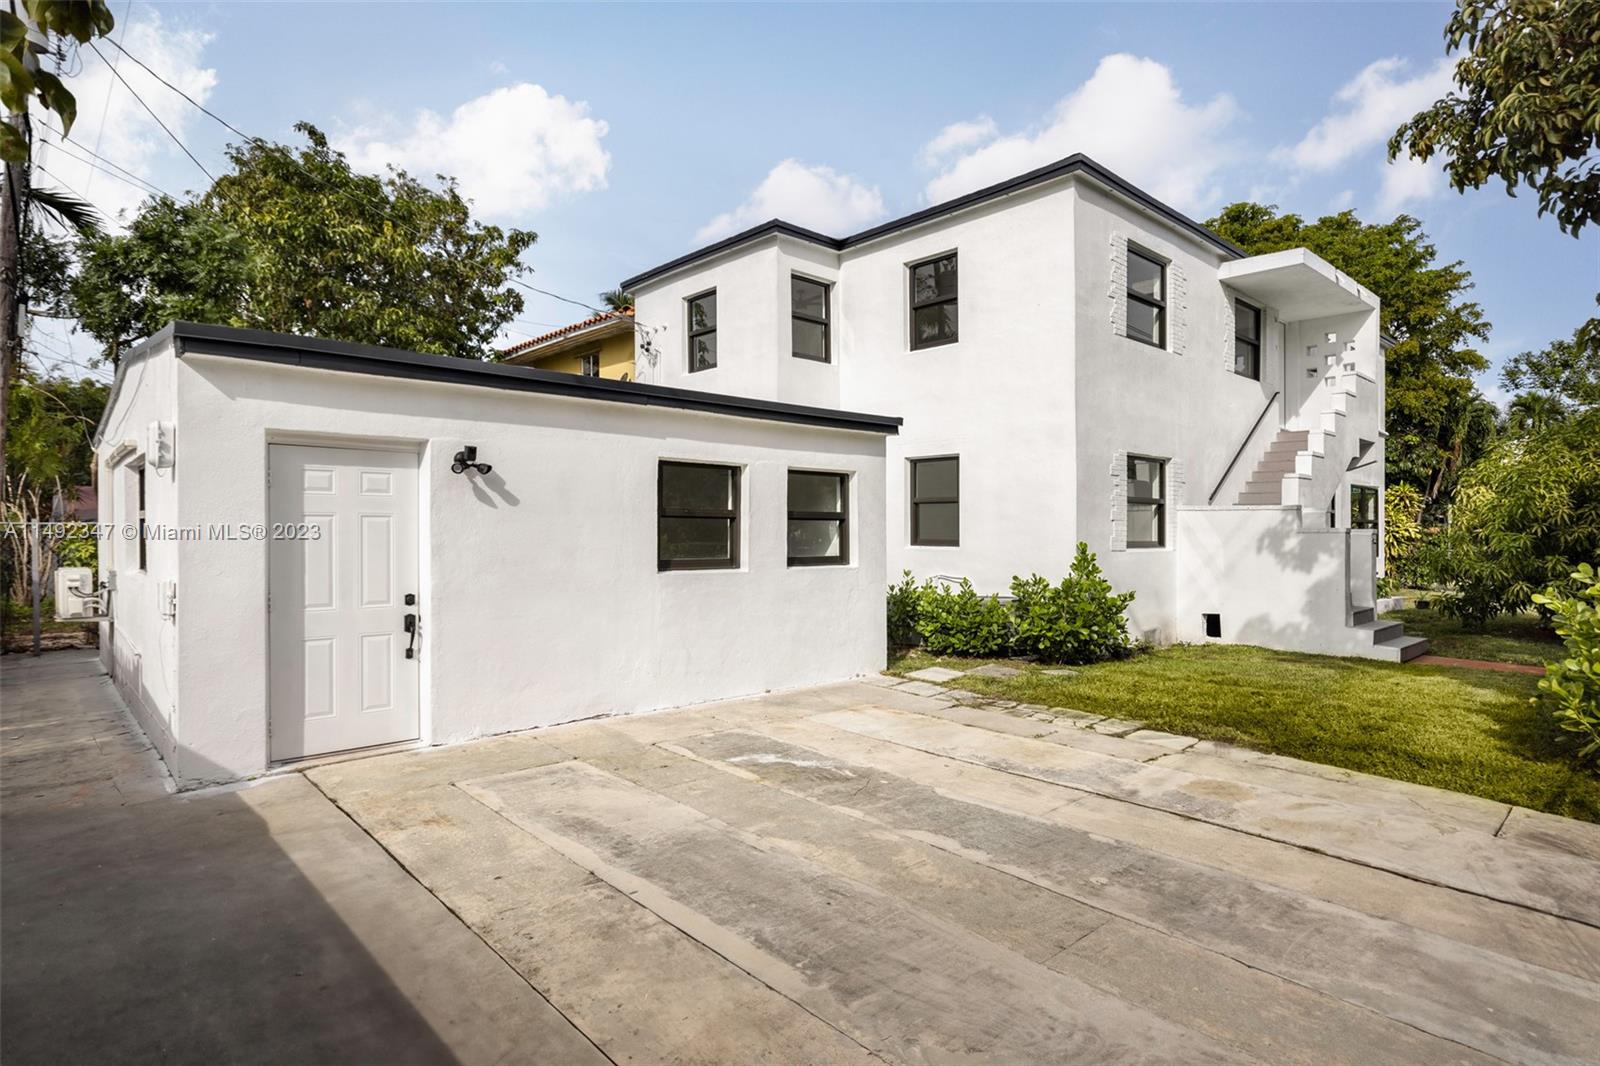 Rental Property at 4222 Ne 1st Ave, Miami, Broward County, Florida -  - $1,825,000 MO.